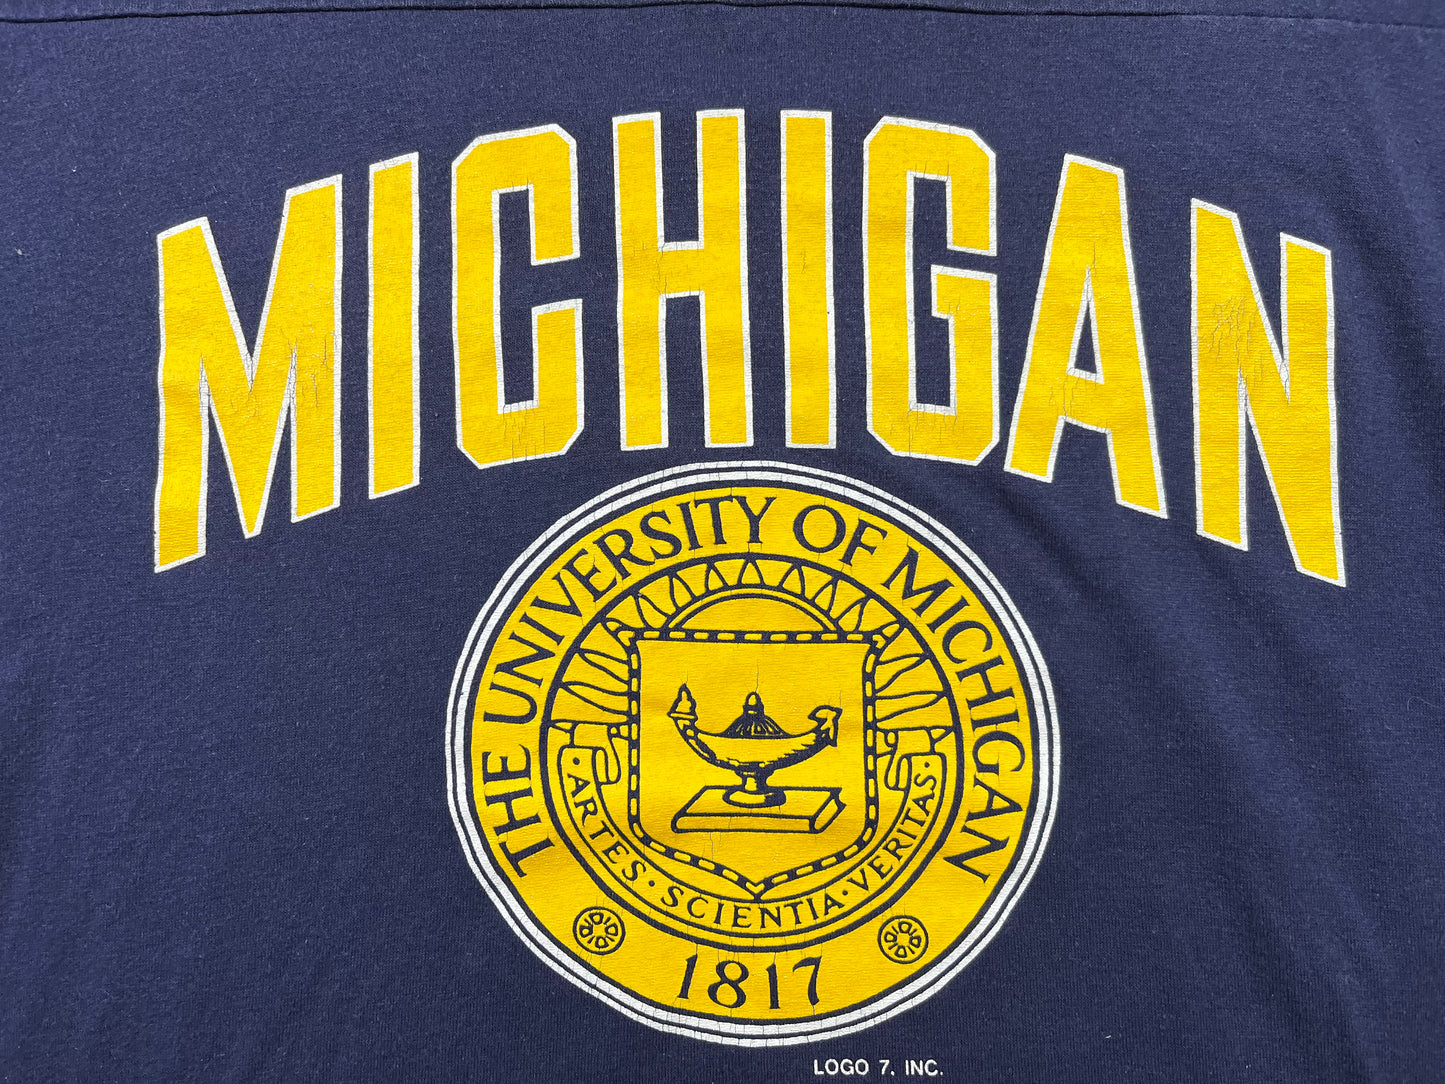 Michigan Seal T-Shirt